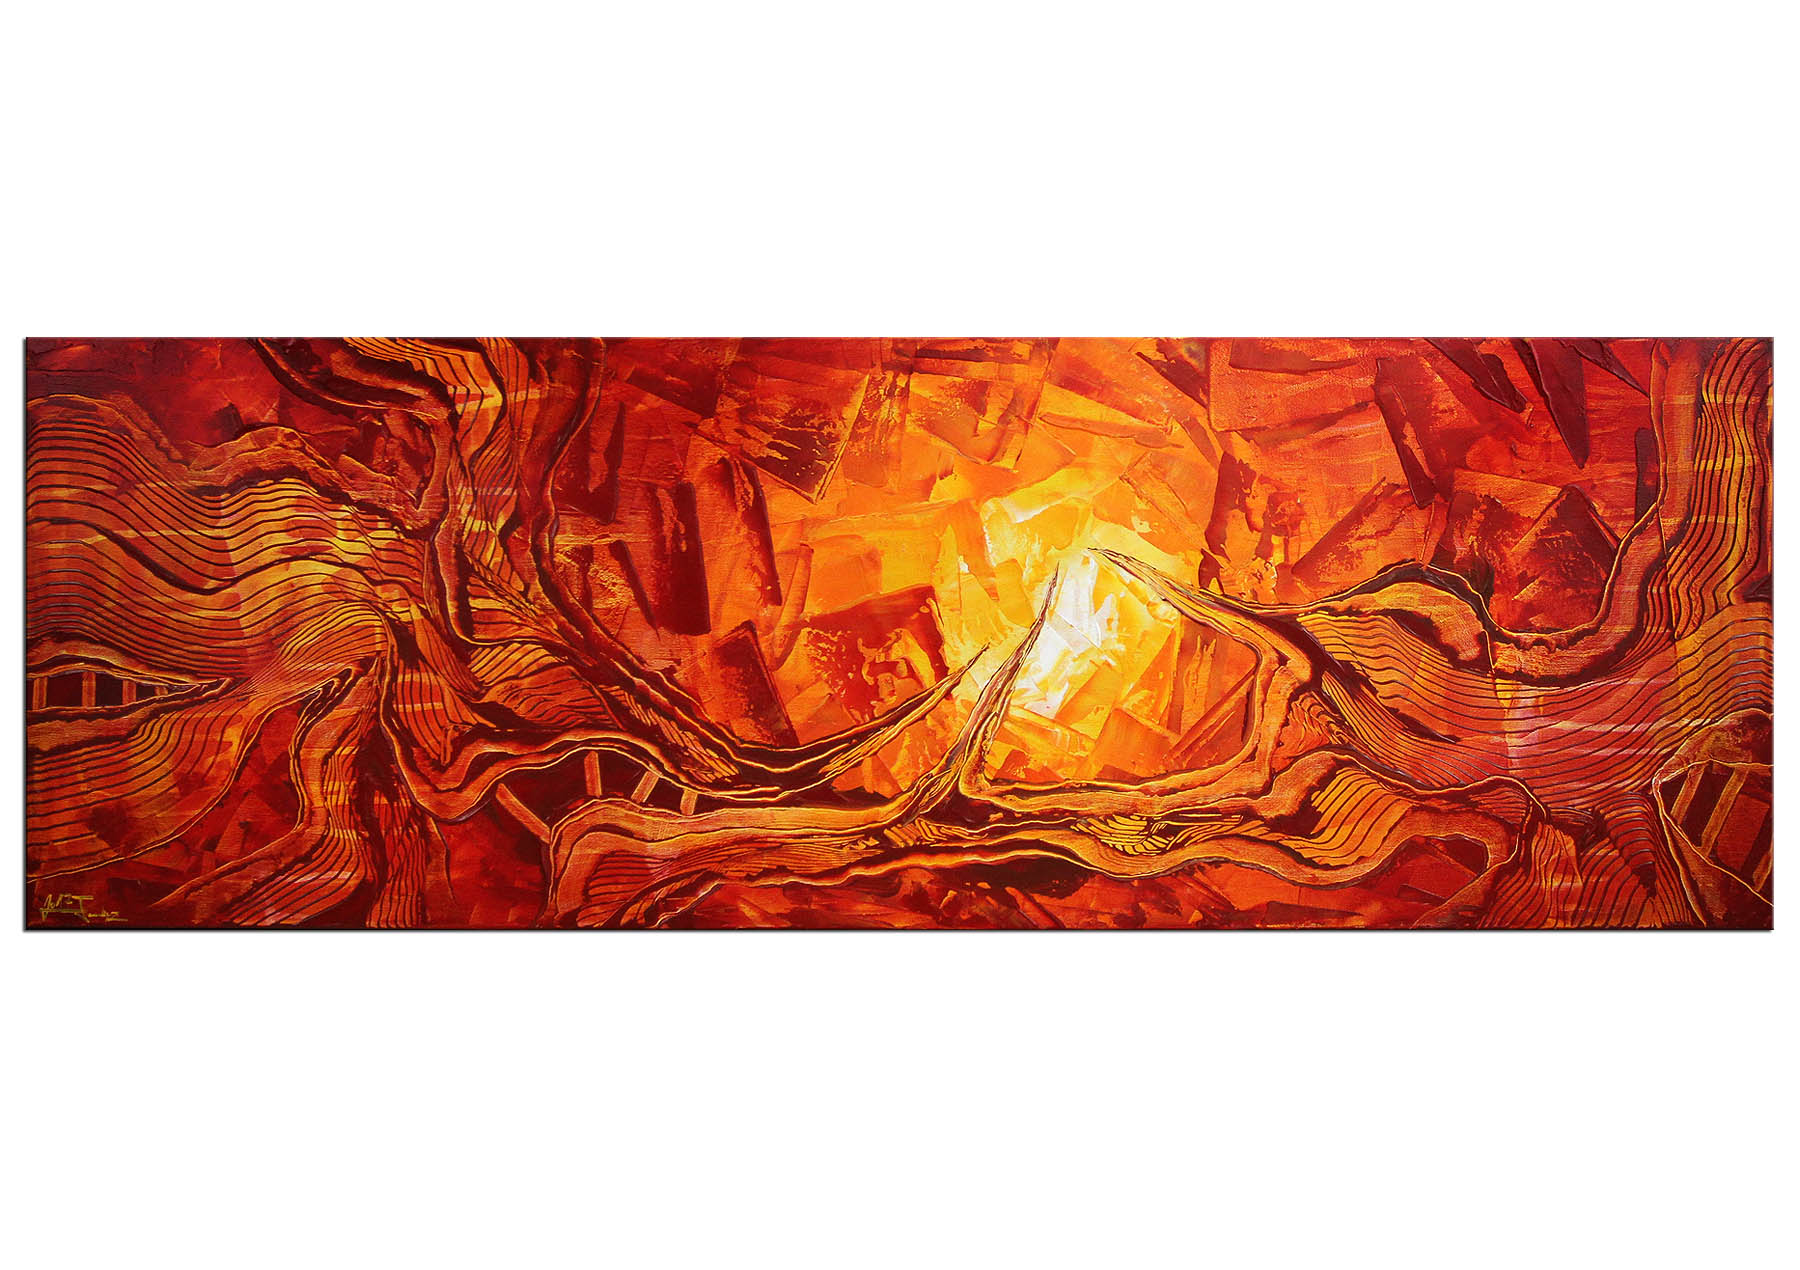 Acrylmalerei abstrakt, Julio Fernandez: "LIQUID FIRE" (ri)